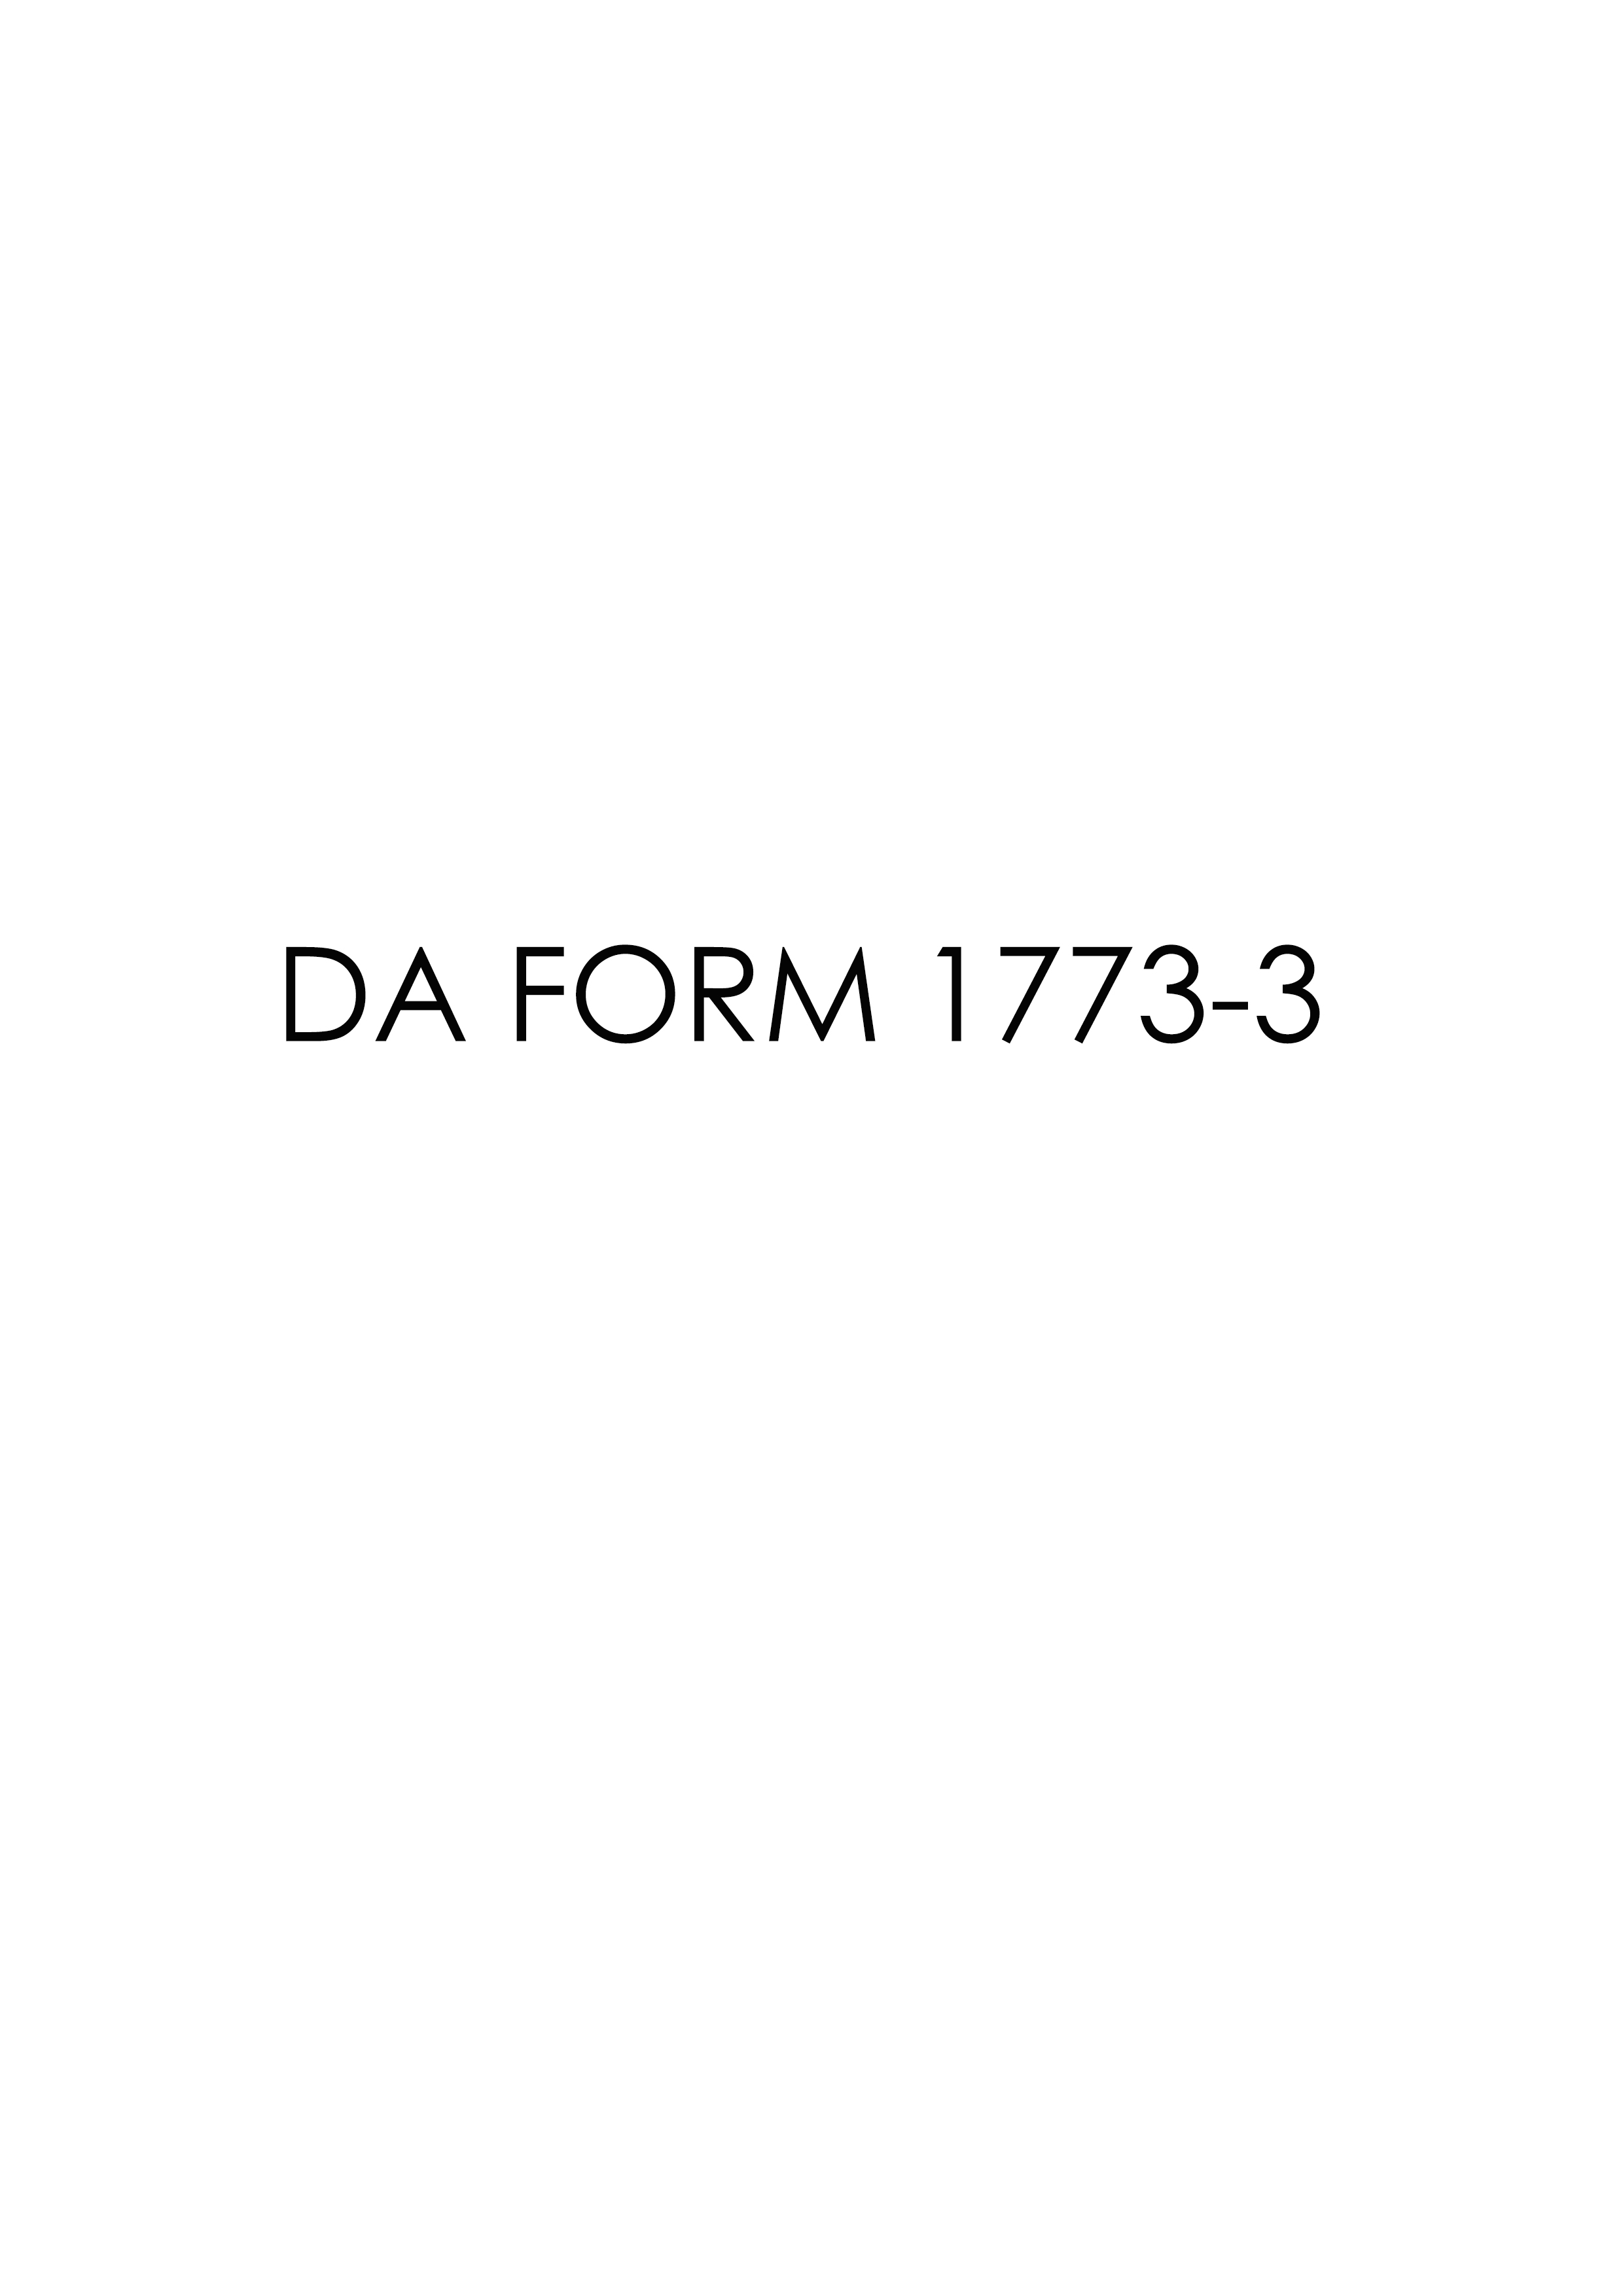 Download da 1773-3 Form Free